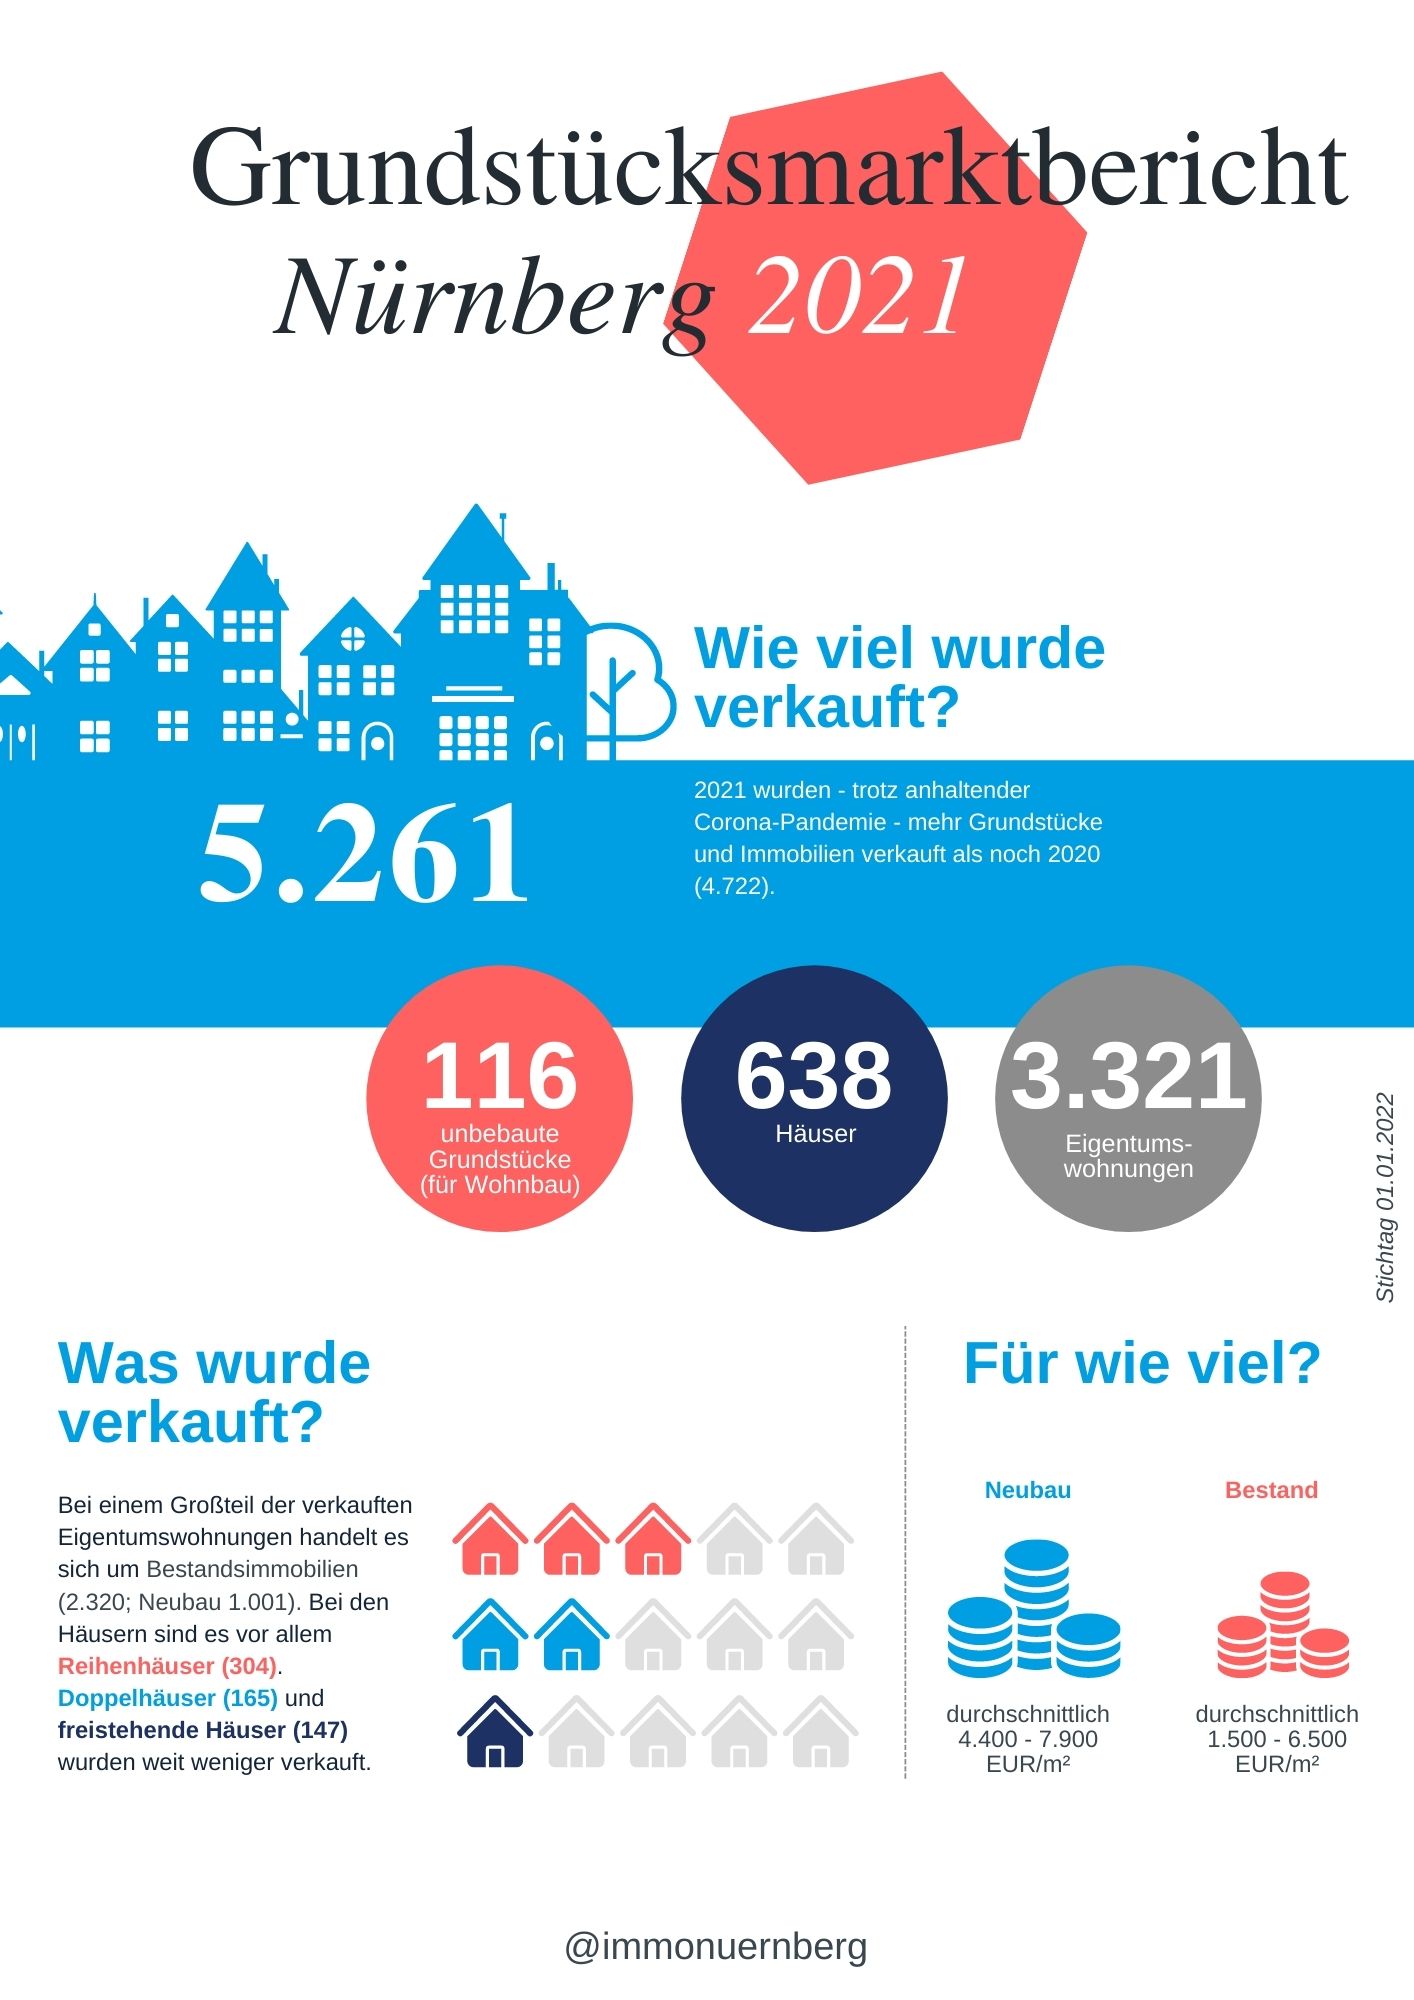 Graphik zum Grundstücksmarktbericht in Nürnberg